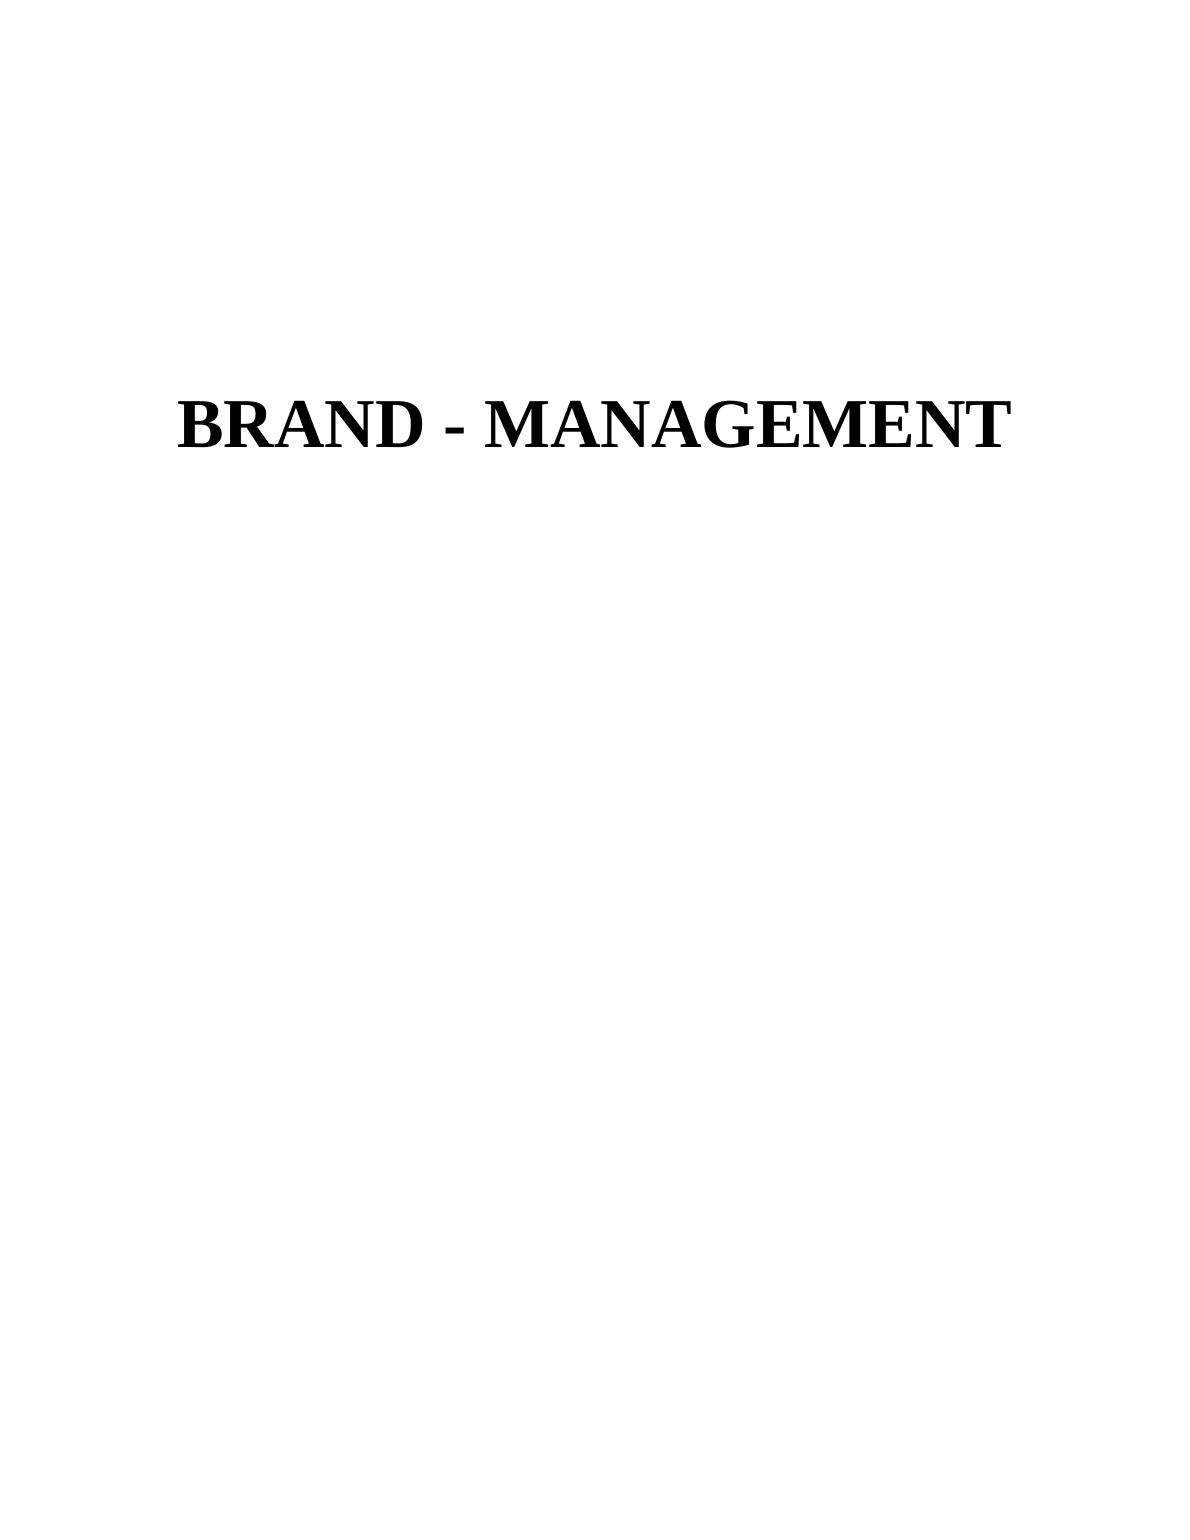 Brand Management Assignment - Doc_1